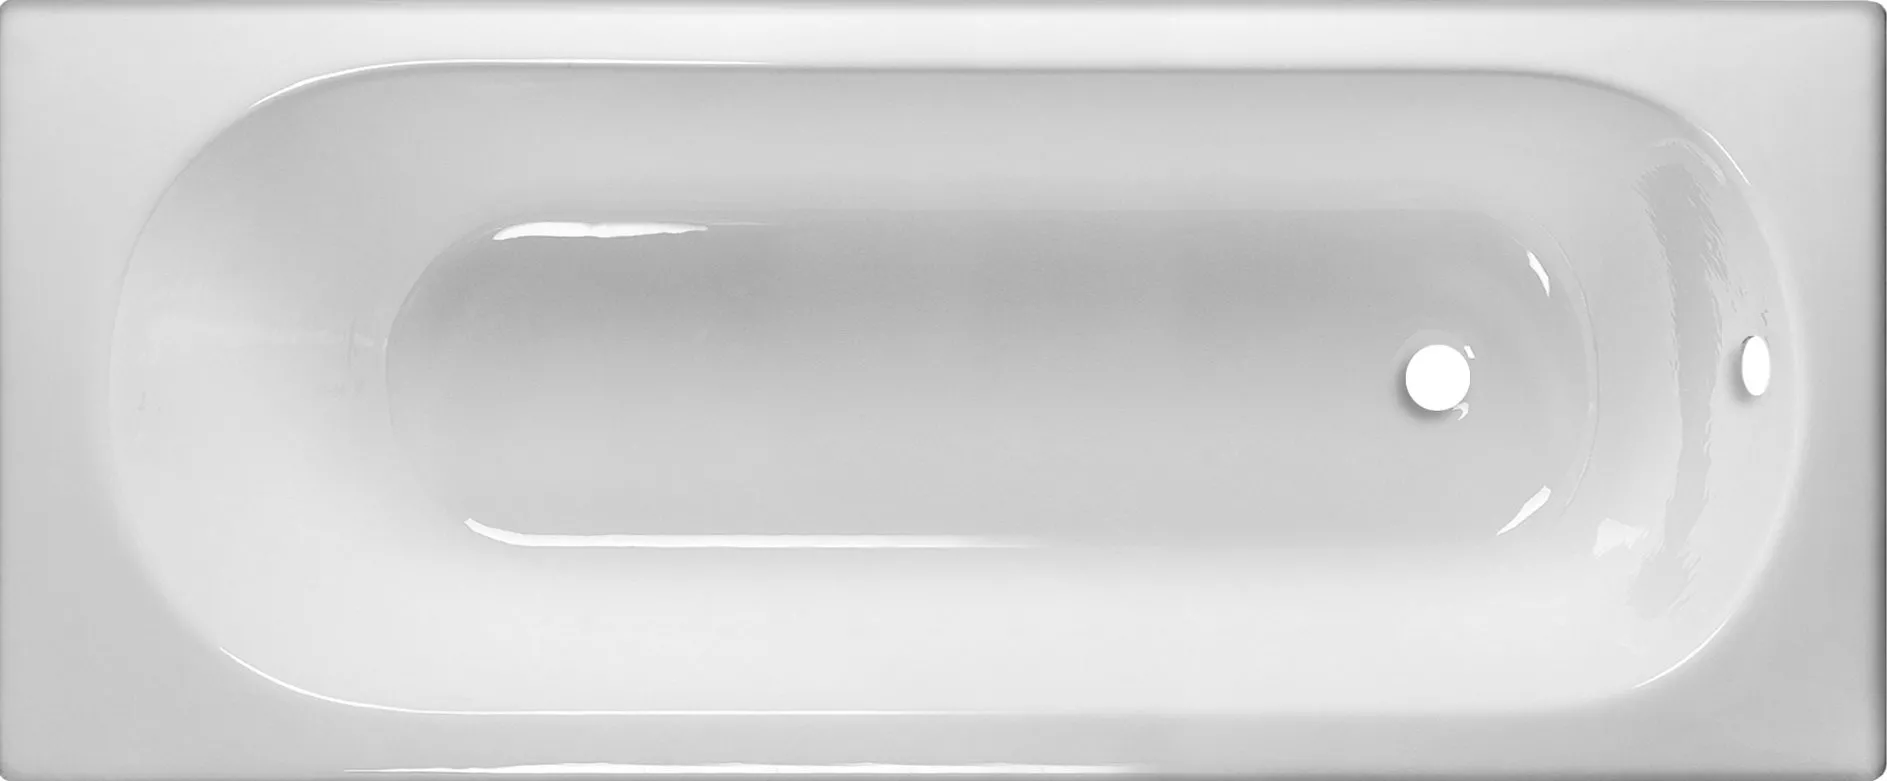 Чугунная ванна Byon Byon 170x70 см (BYON 170x70), цвет белый V0000220 - фото 1